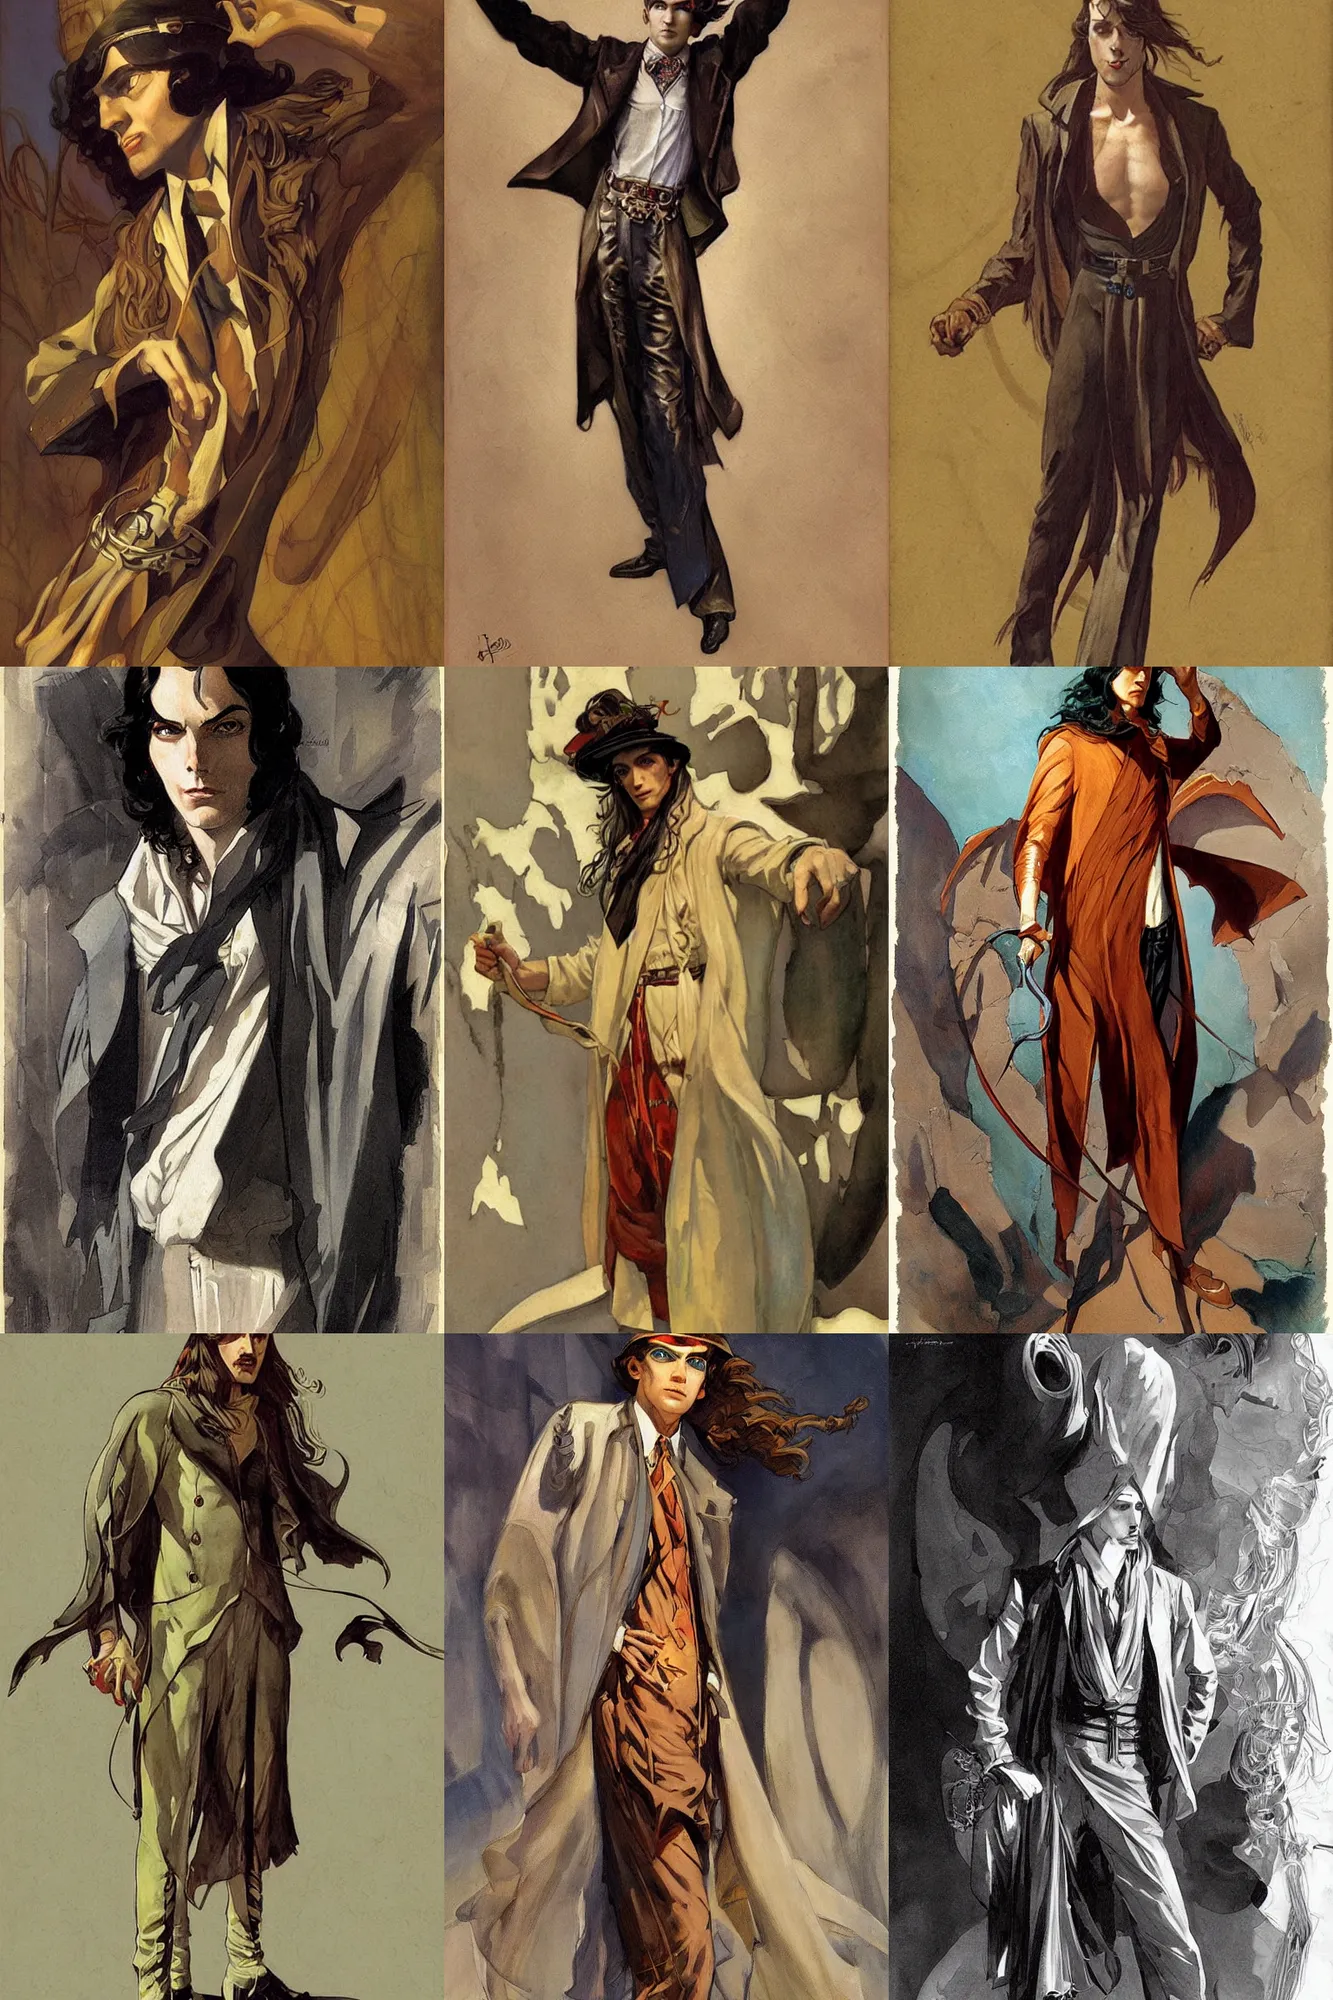 Prompt: thin male mage with long dark hair, 1 9 2 0 s fashion, fantasy, art by joseph leyendecker, finnian macmanus, marc simonetti